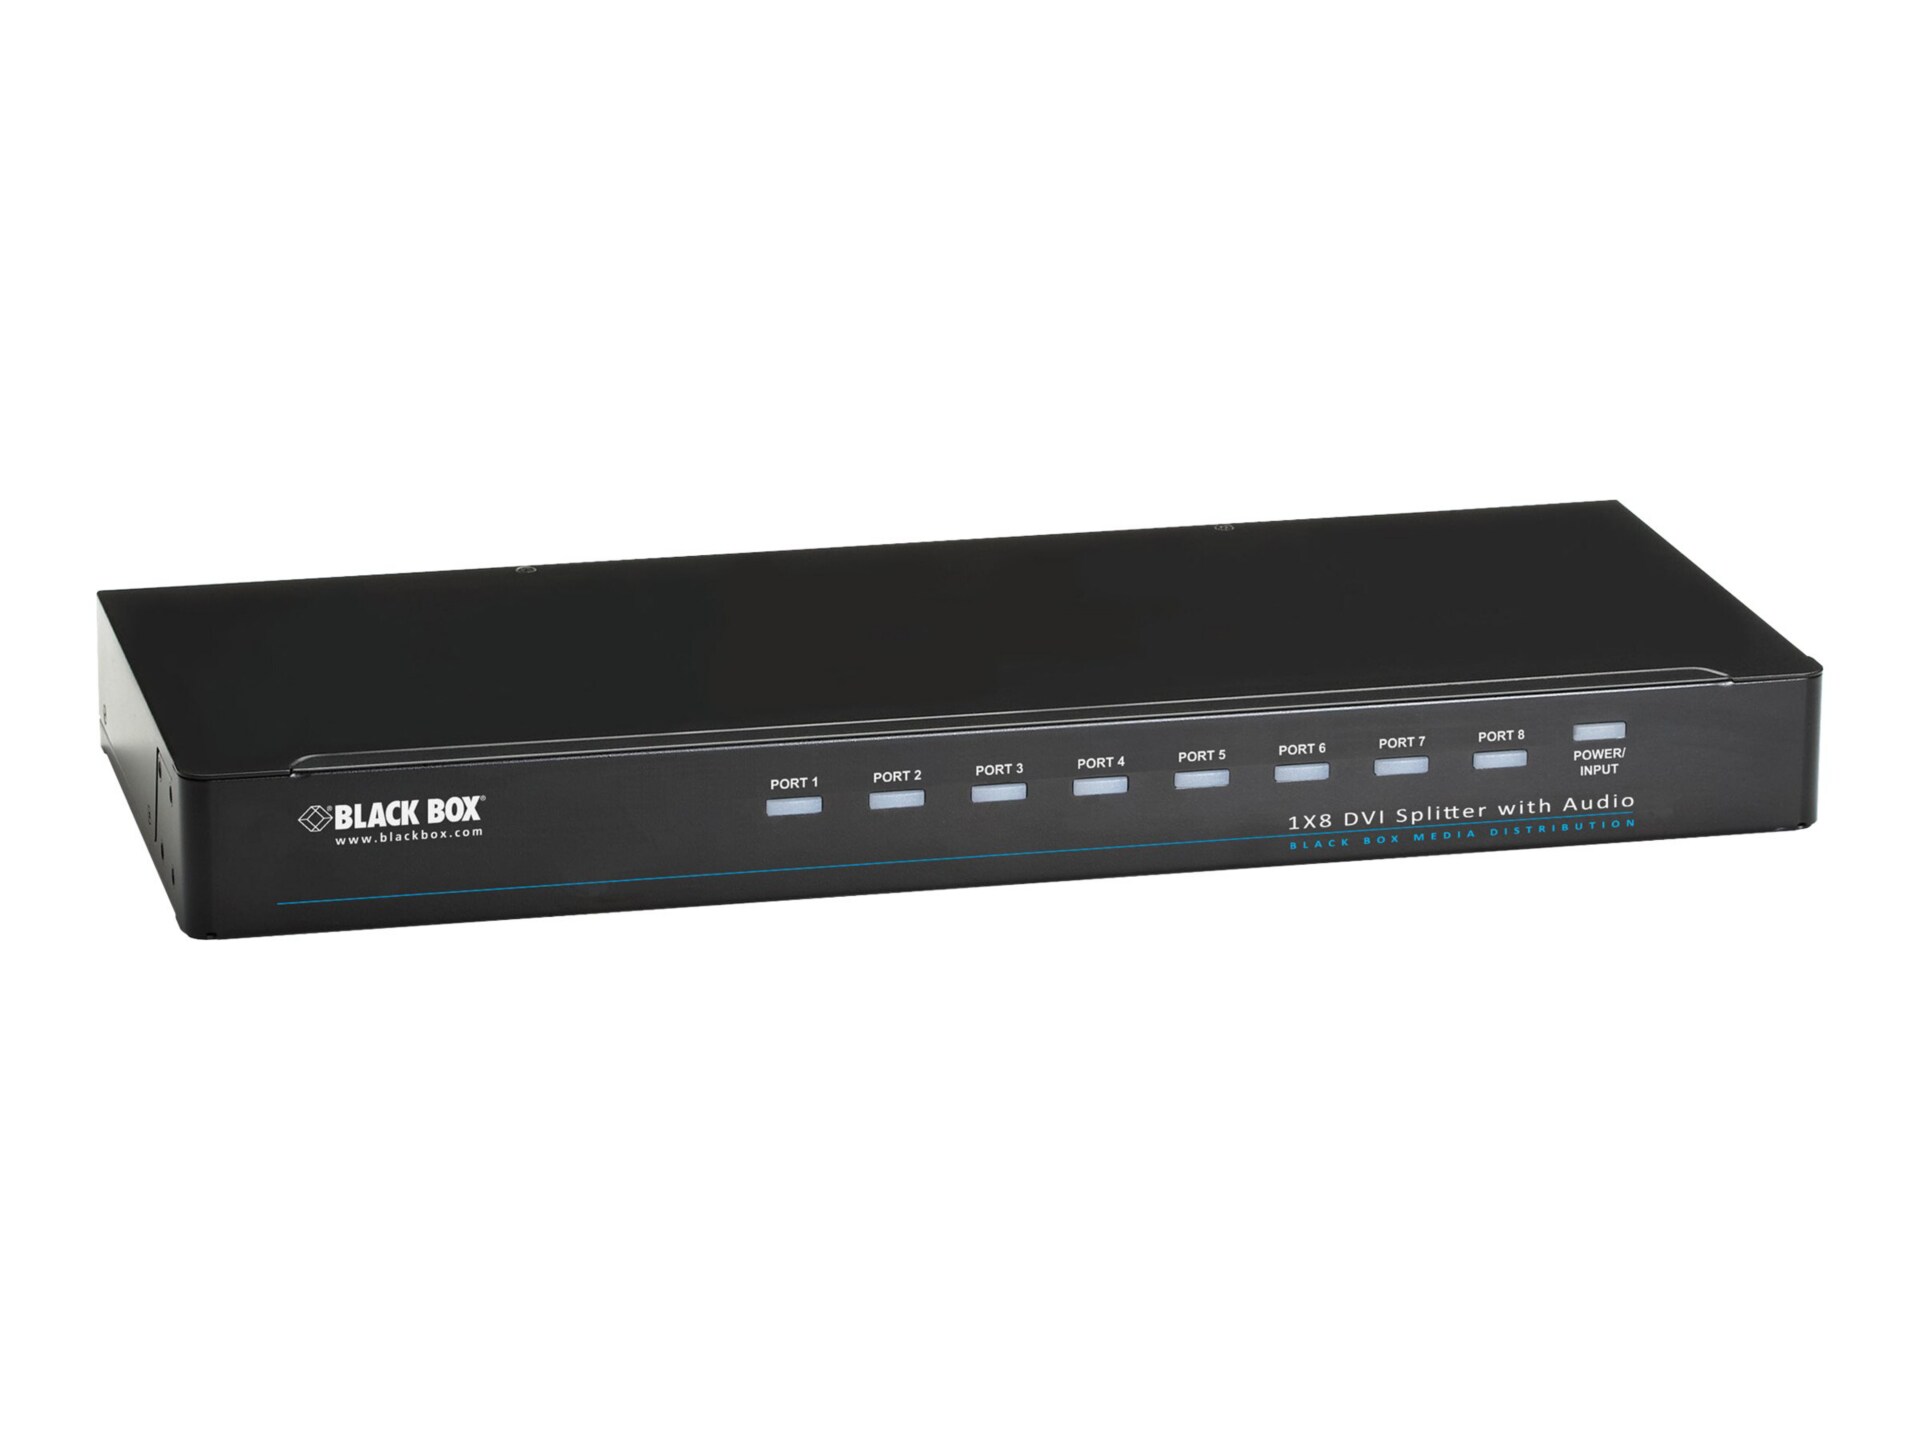 Black Box DVI-D Splitter with Audio and HDCP, 1 x 8 - video/audio splitter